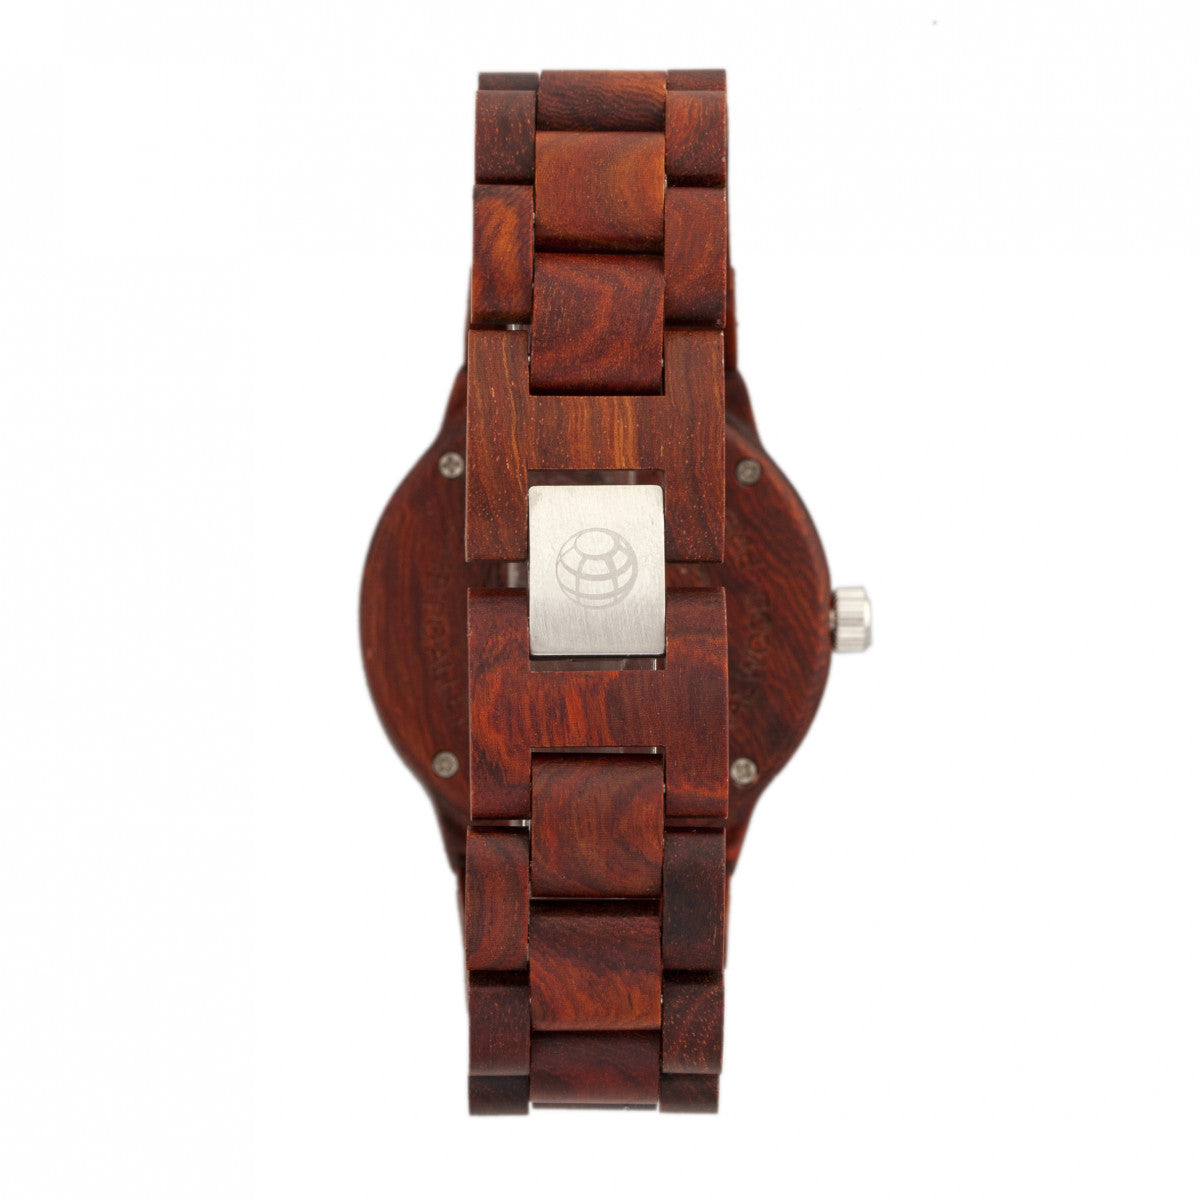 Earth Wood Biscayne Bracelet Watch w/Date - Red - ETHEW4203